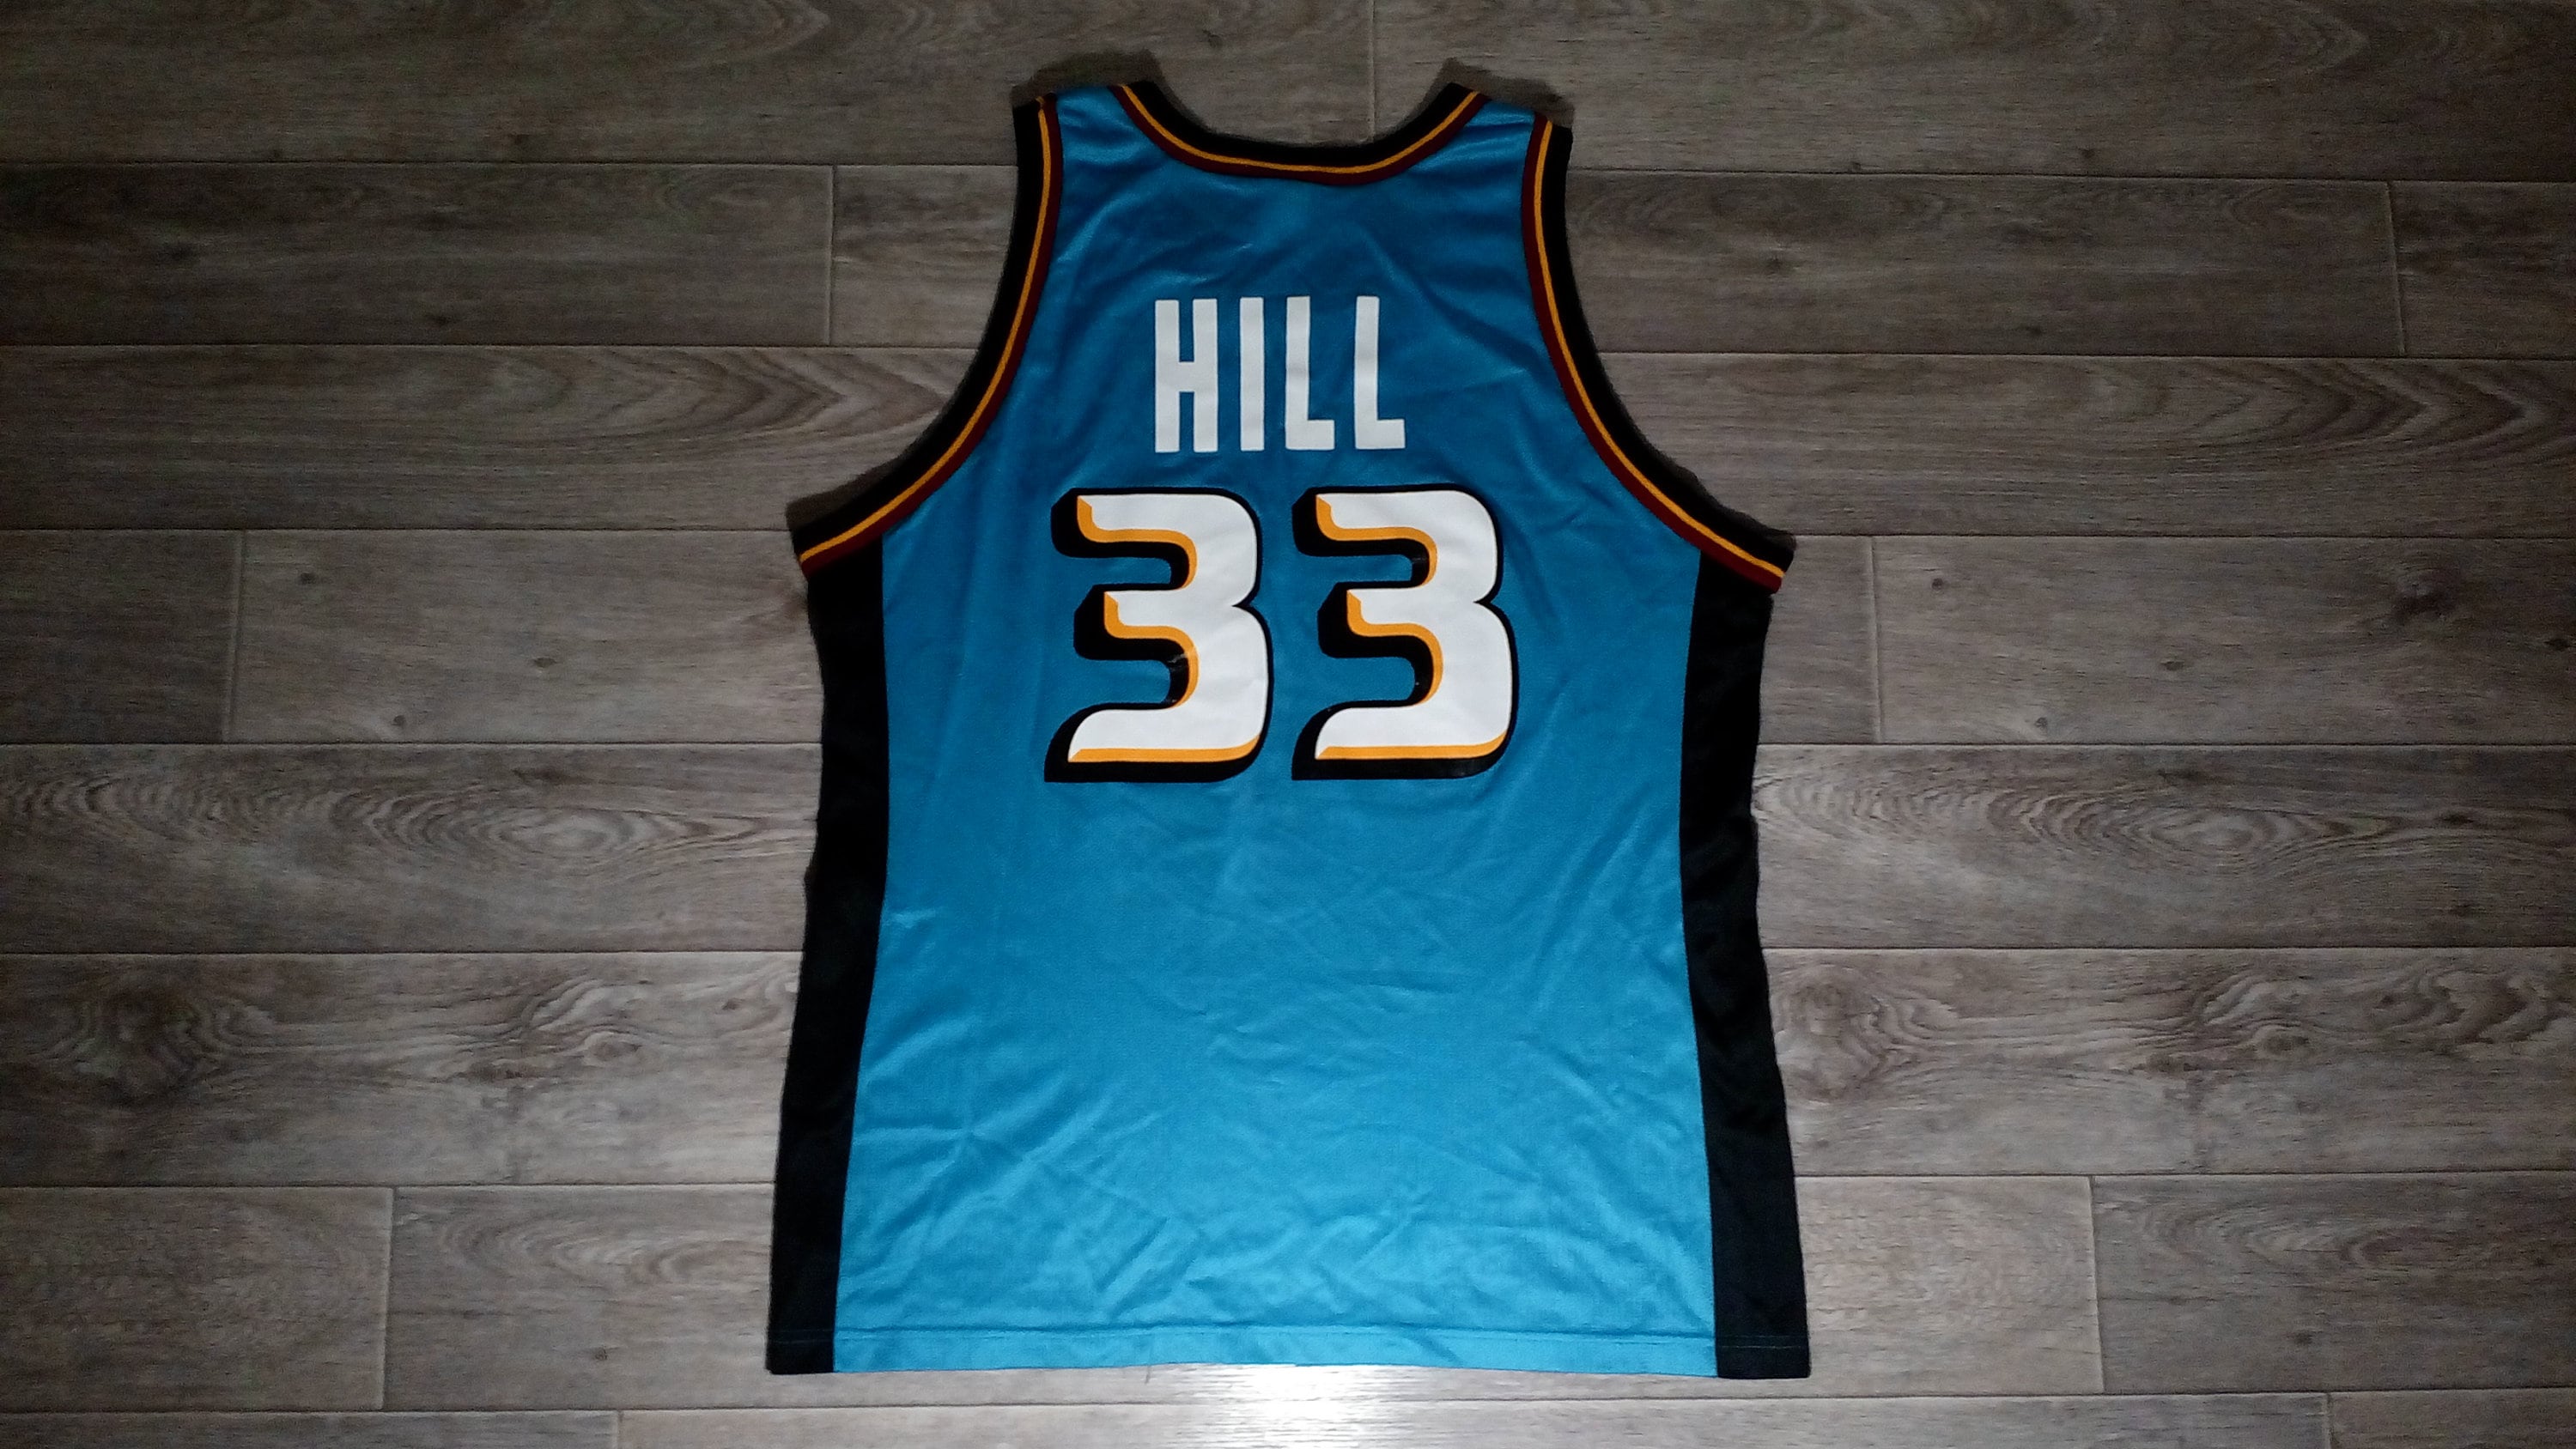 Vintage Grant Hill “USA Olympics” Champion Basketball Jersey